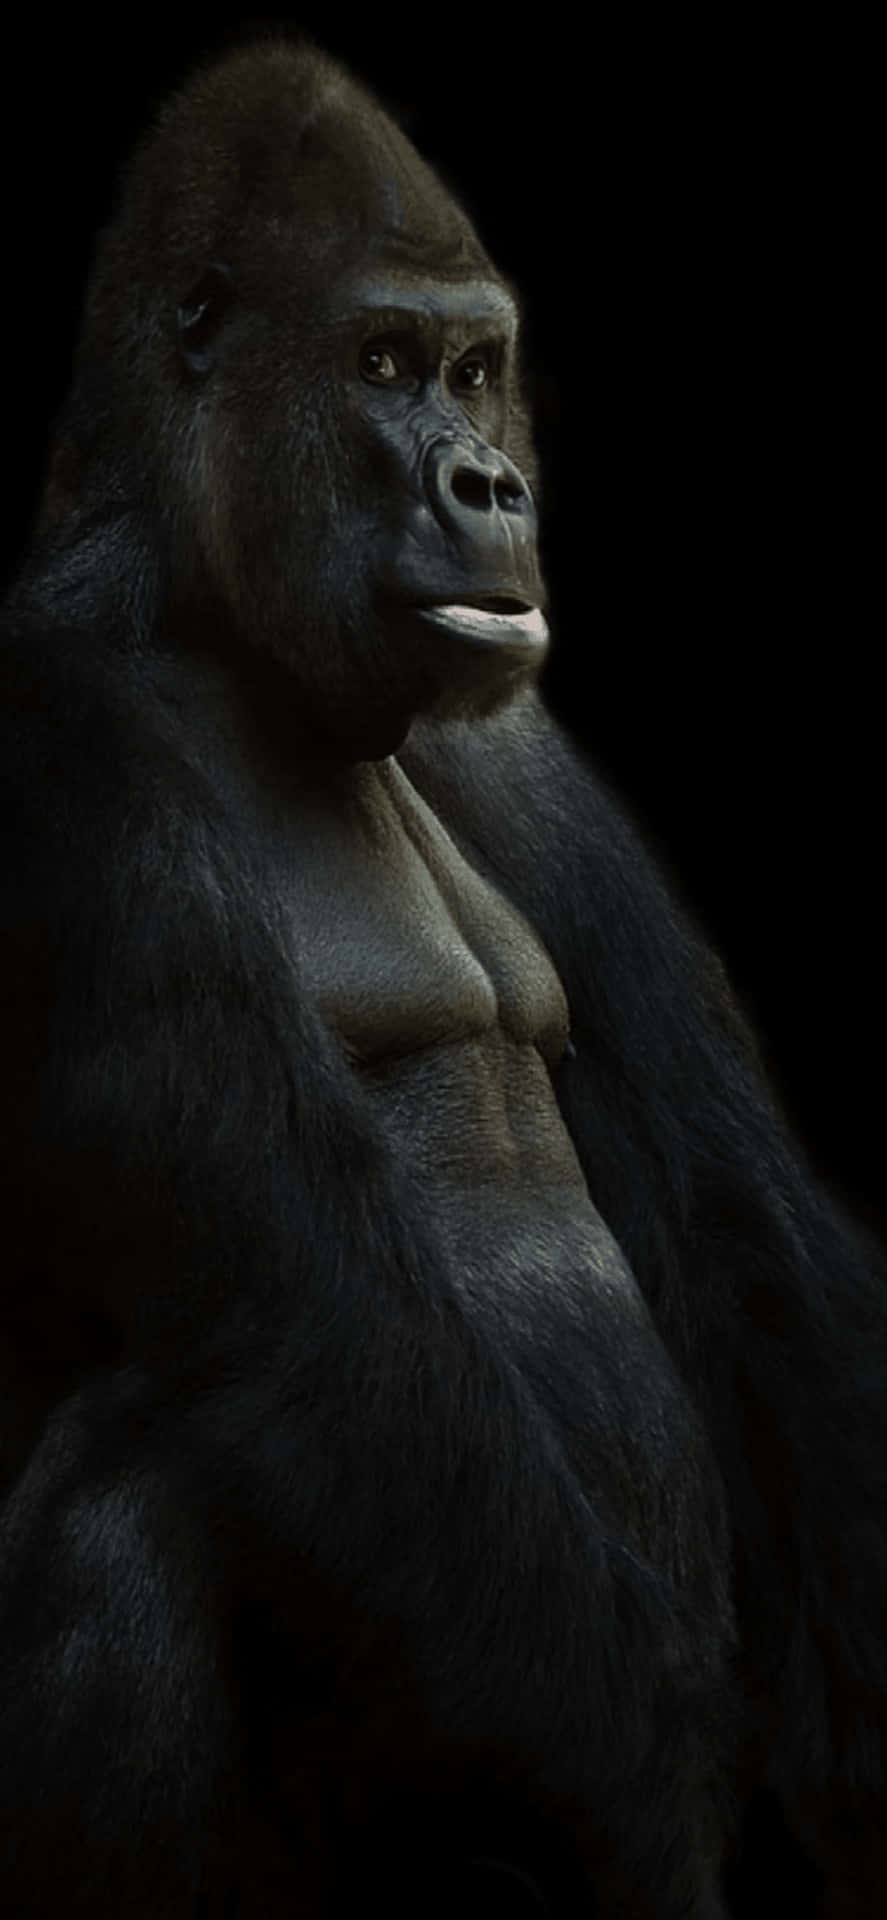 The all-new iPhone X gorilla wallpaper